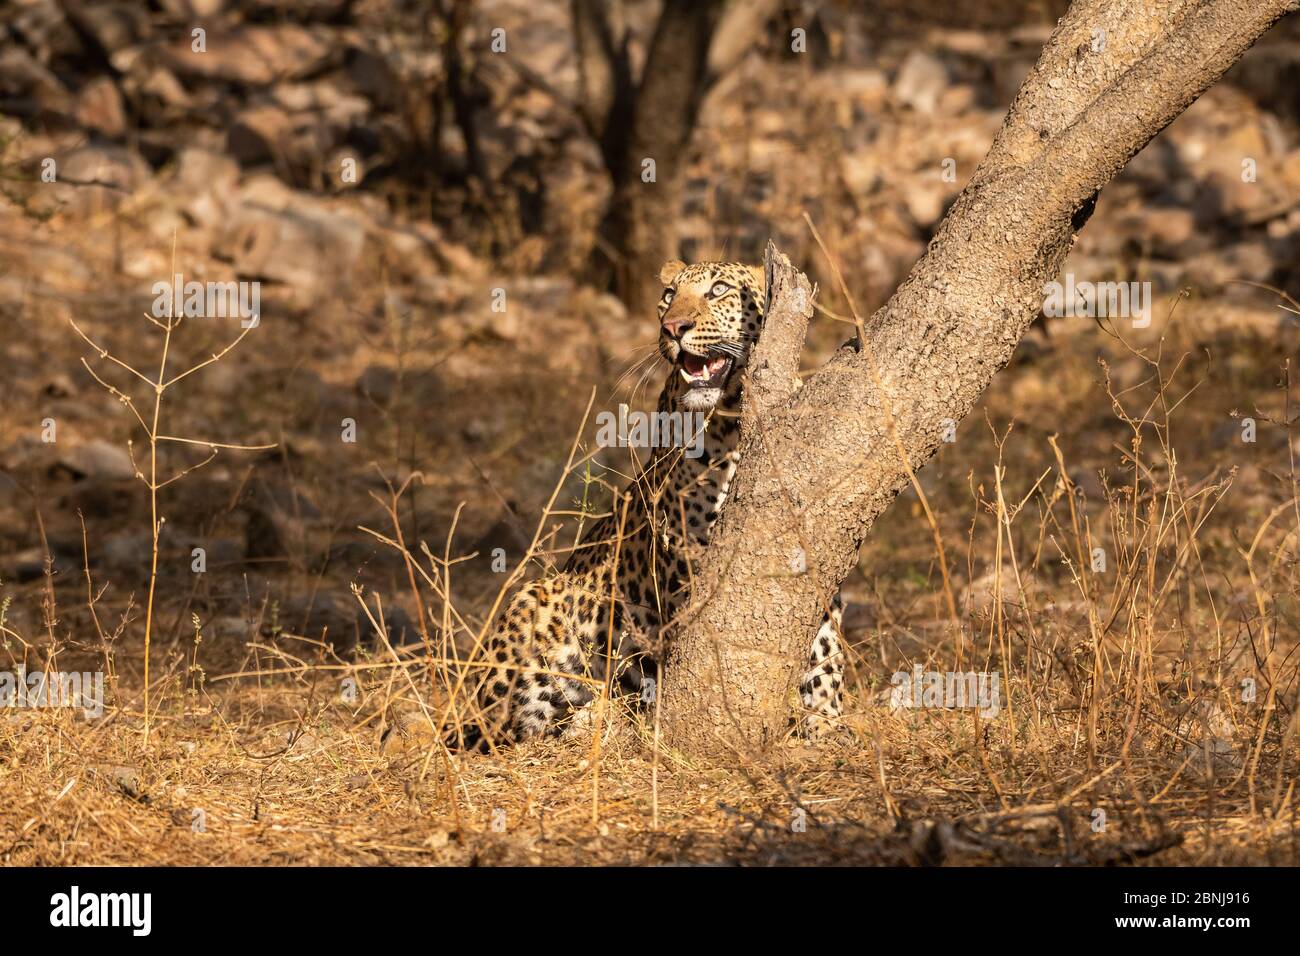 Enorme leopardo maschile o pantera o panthera pardus fusca a piedi nella riserva forestale jhalana, jaipur, rajasthan, india Foto Stock